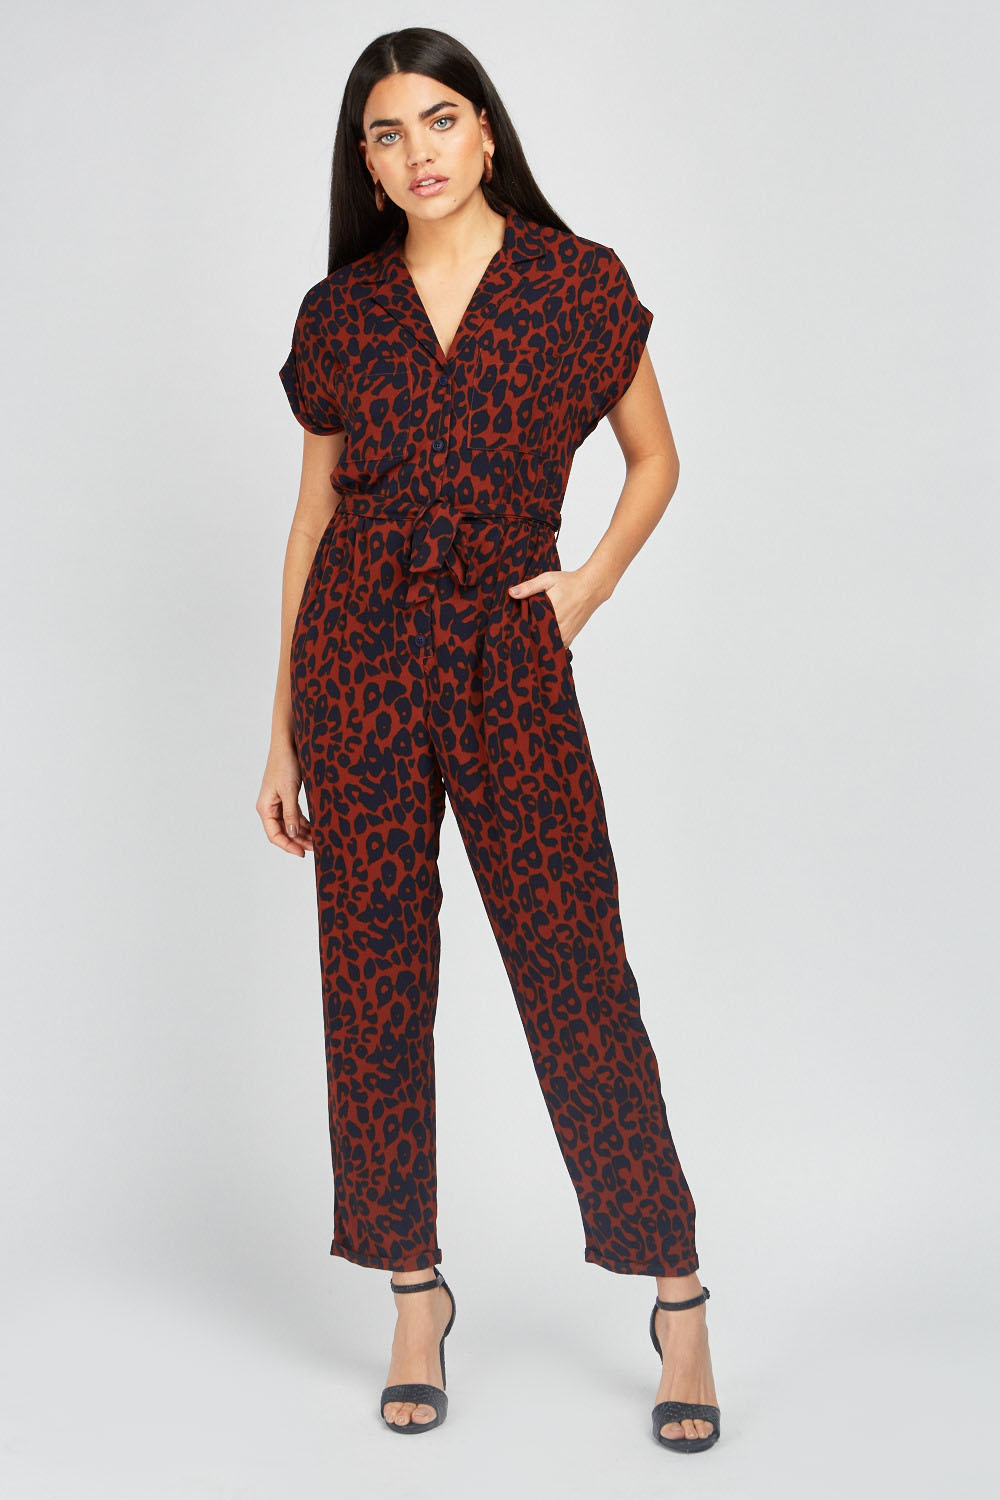 Belted Leopard Print Jumpsuit - Just $7